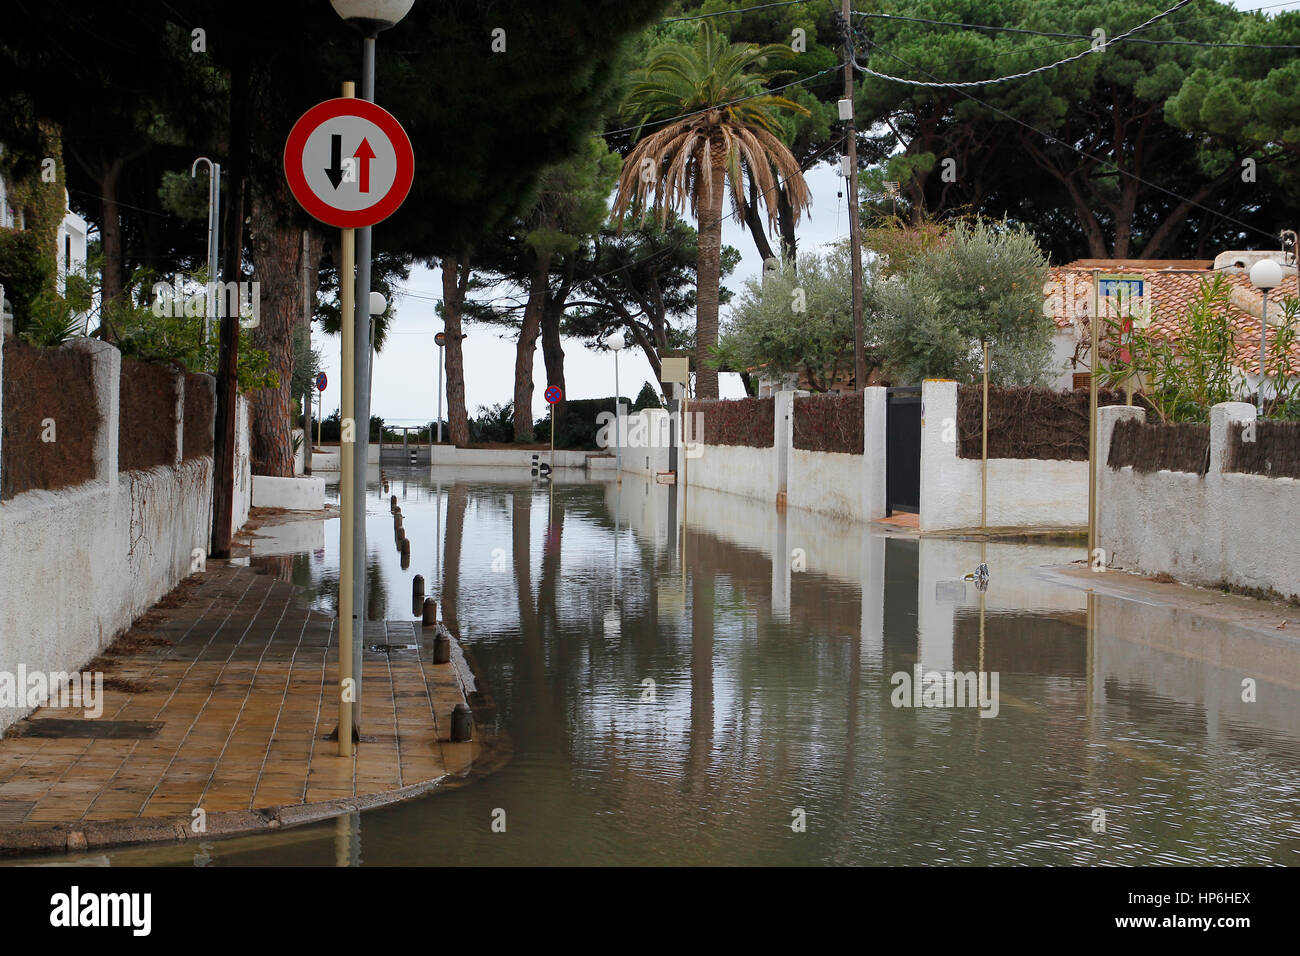 Flooded street for rain inundation Stock Photo